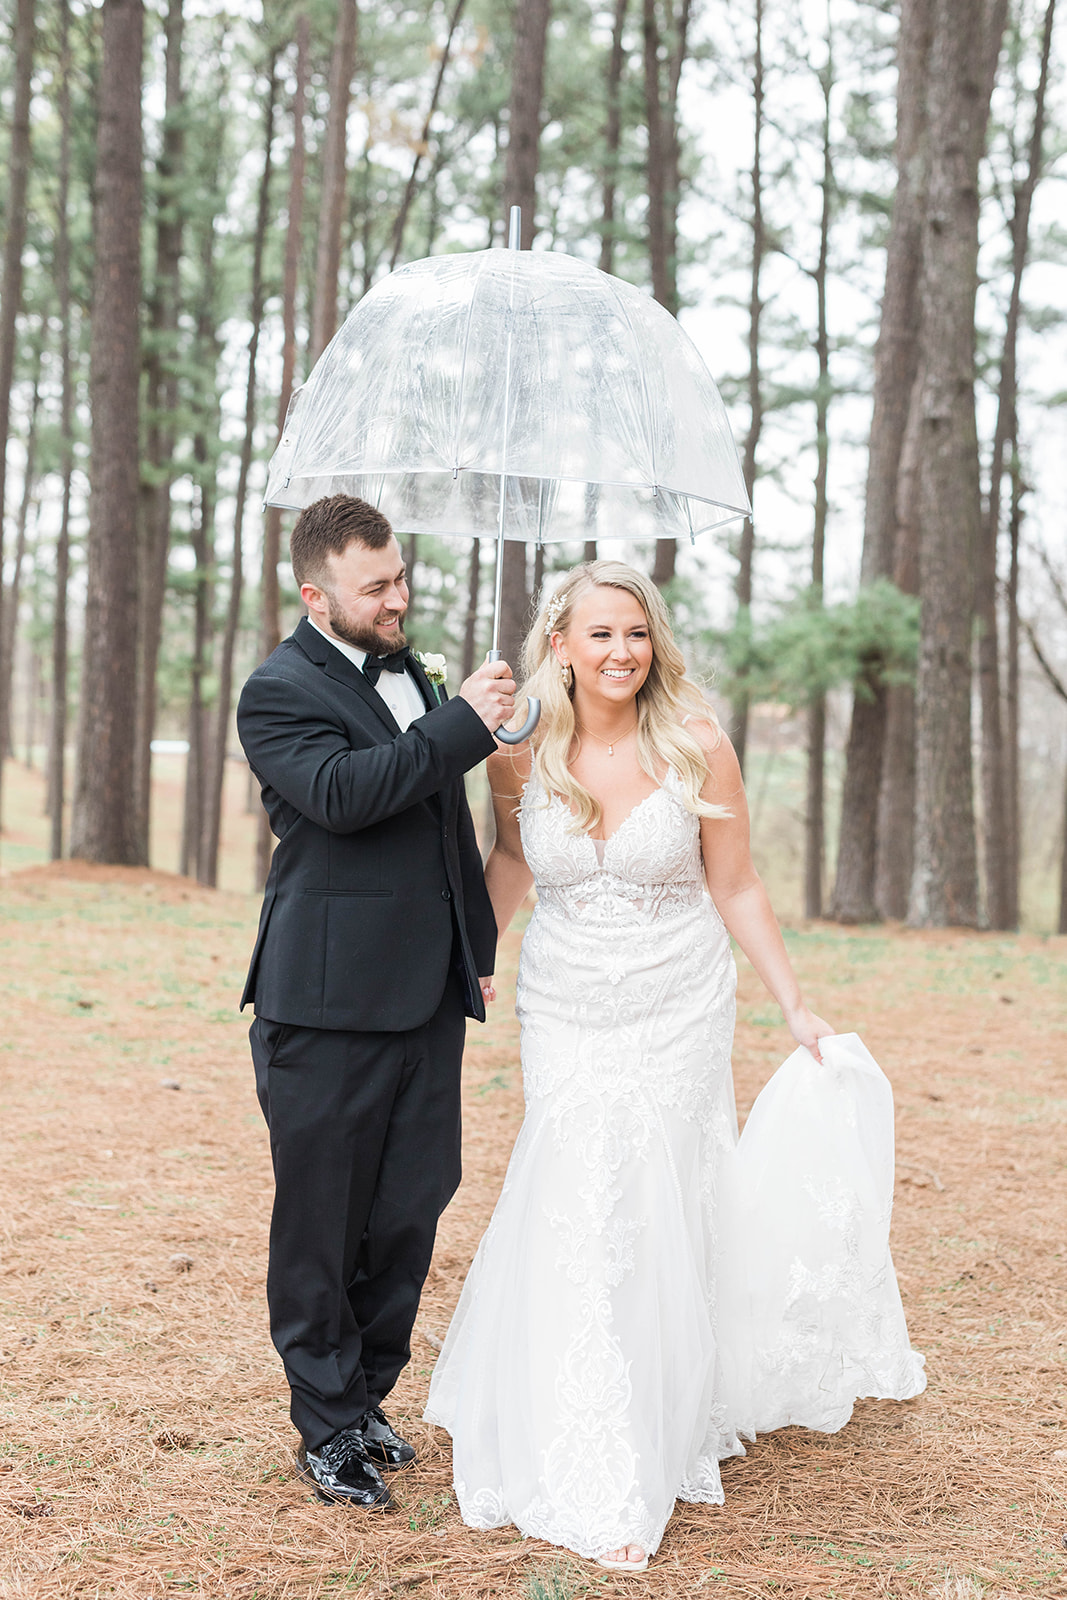 Bride and groom with umbrella on rainy wedding day